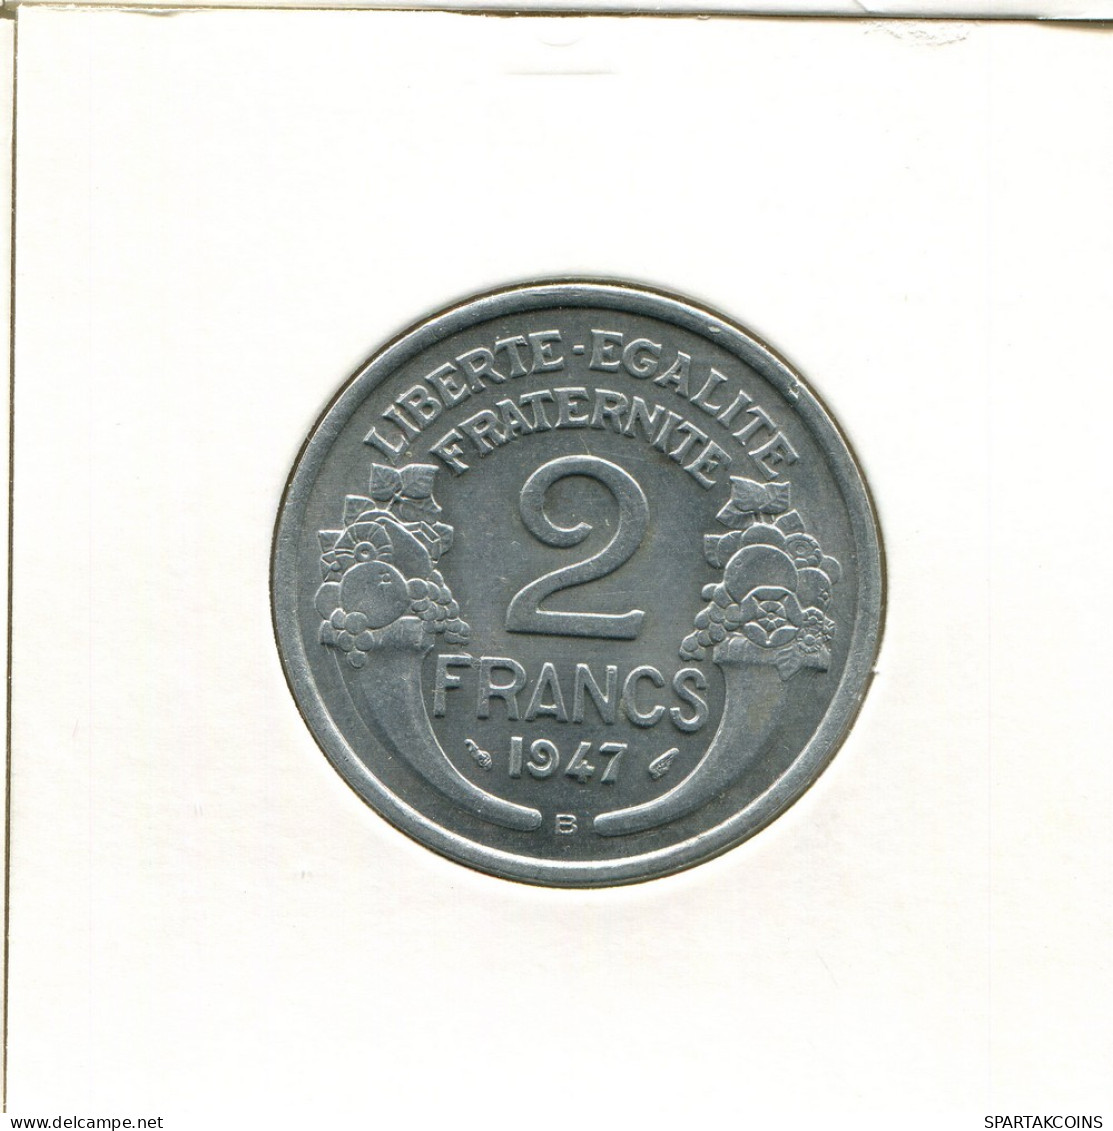 2 FRANCS 1947 B FRANCE French Coin #AK643 - 2 Francs